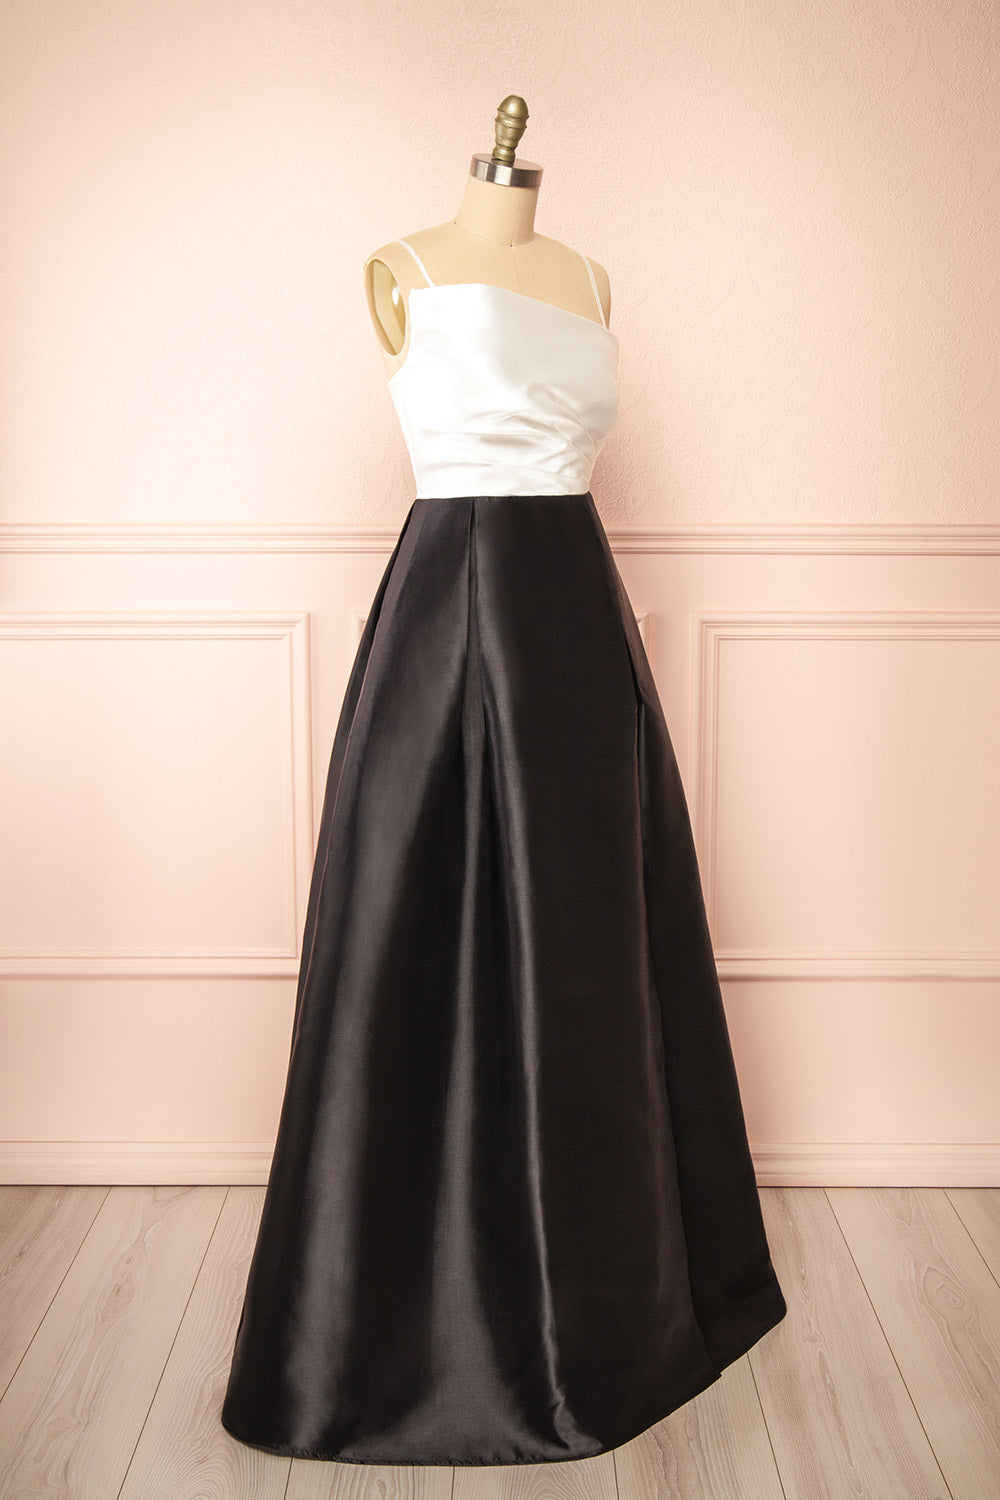 Adanel Black & White Maxi Dress w/ Slit | Boutique 1861 side view